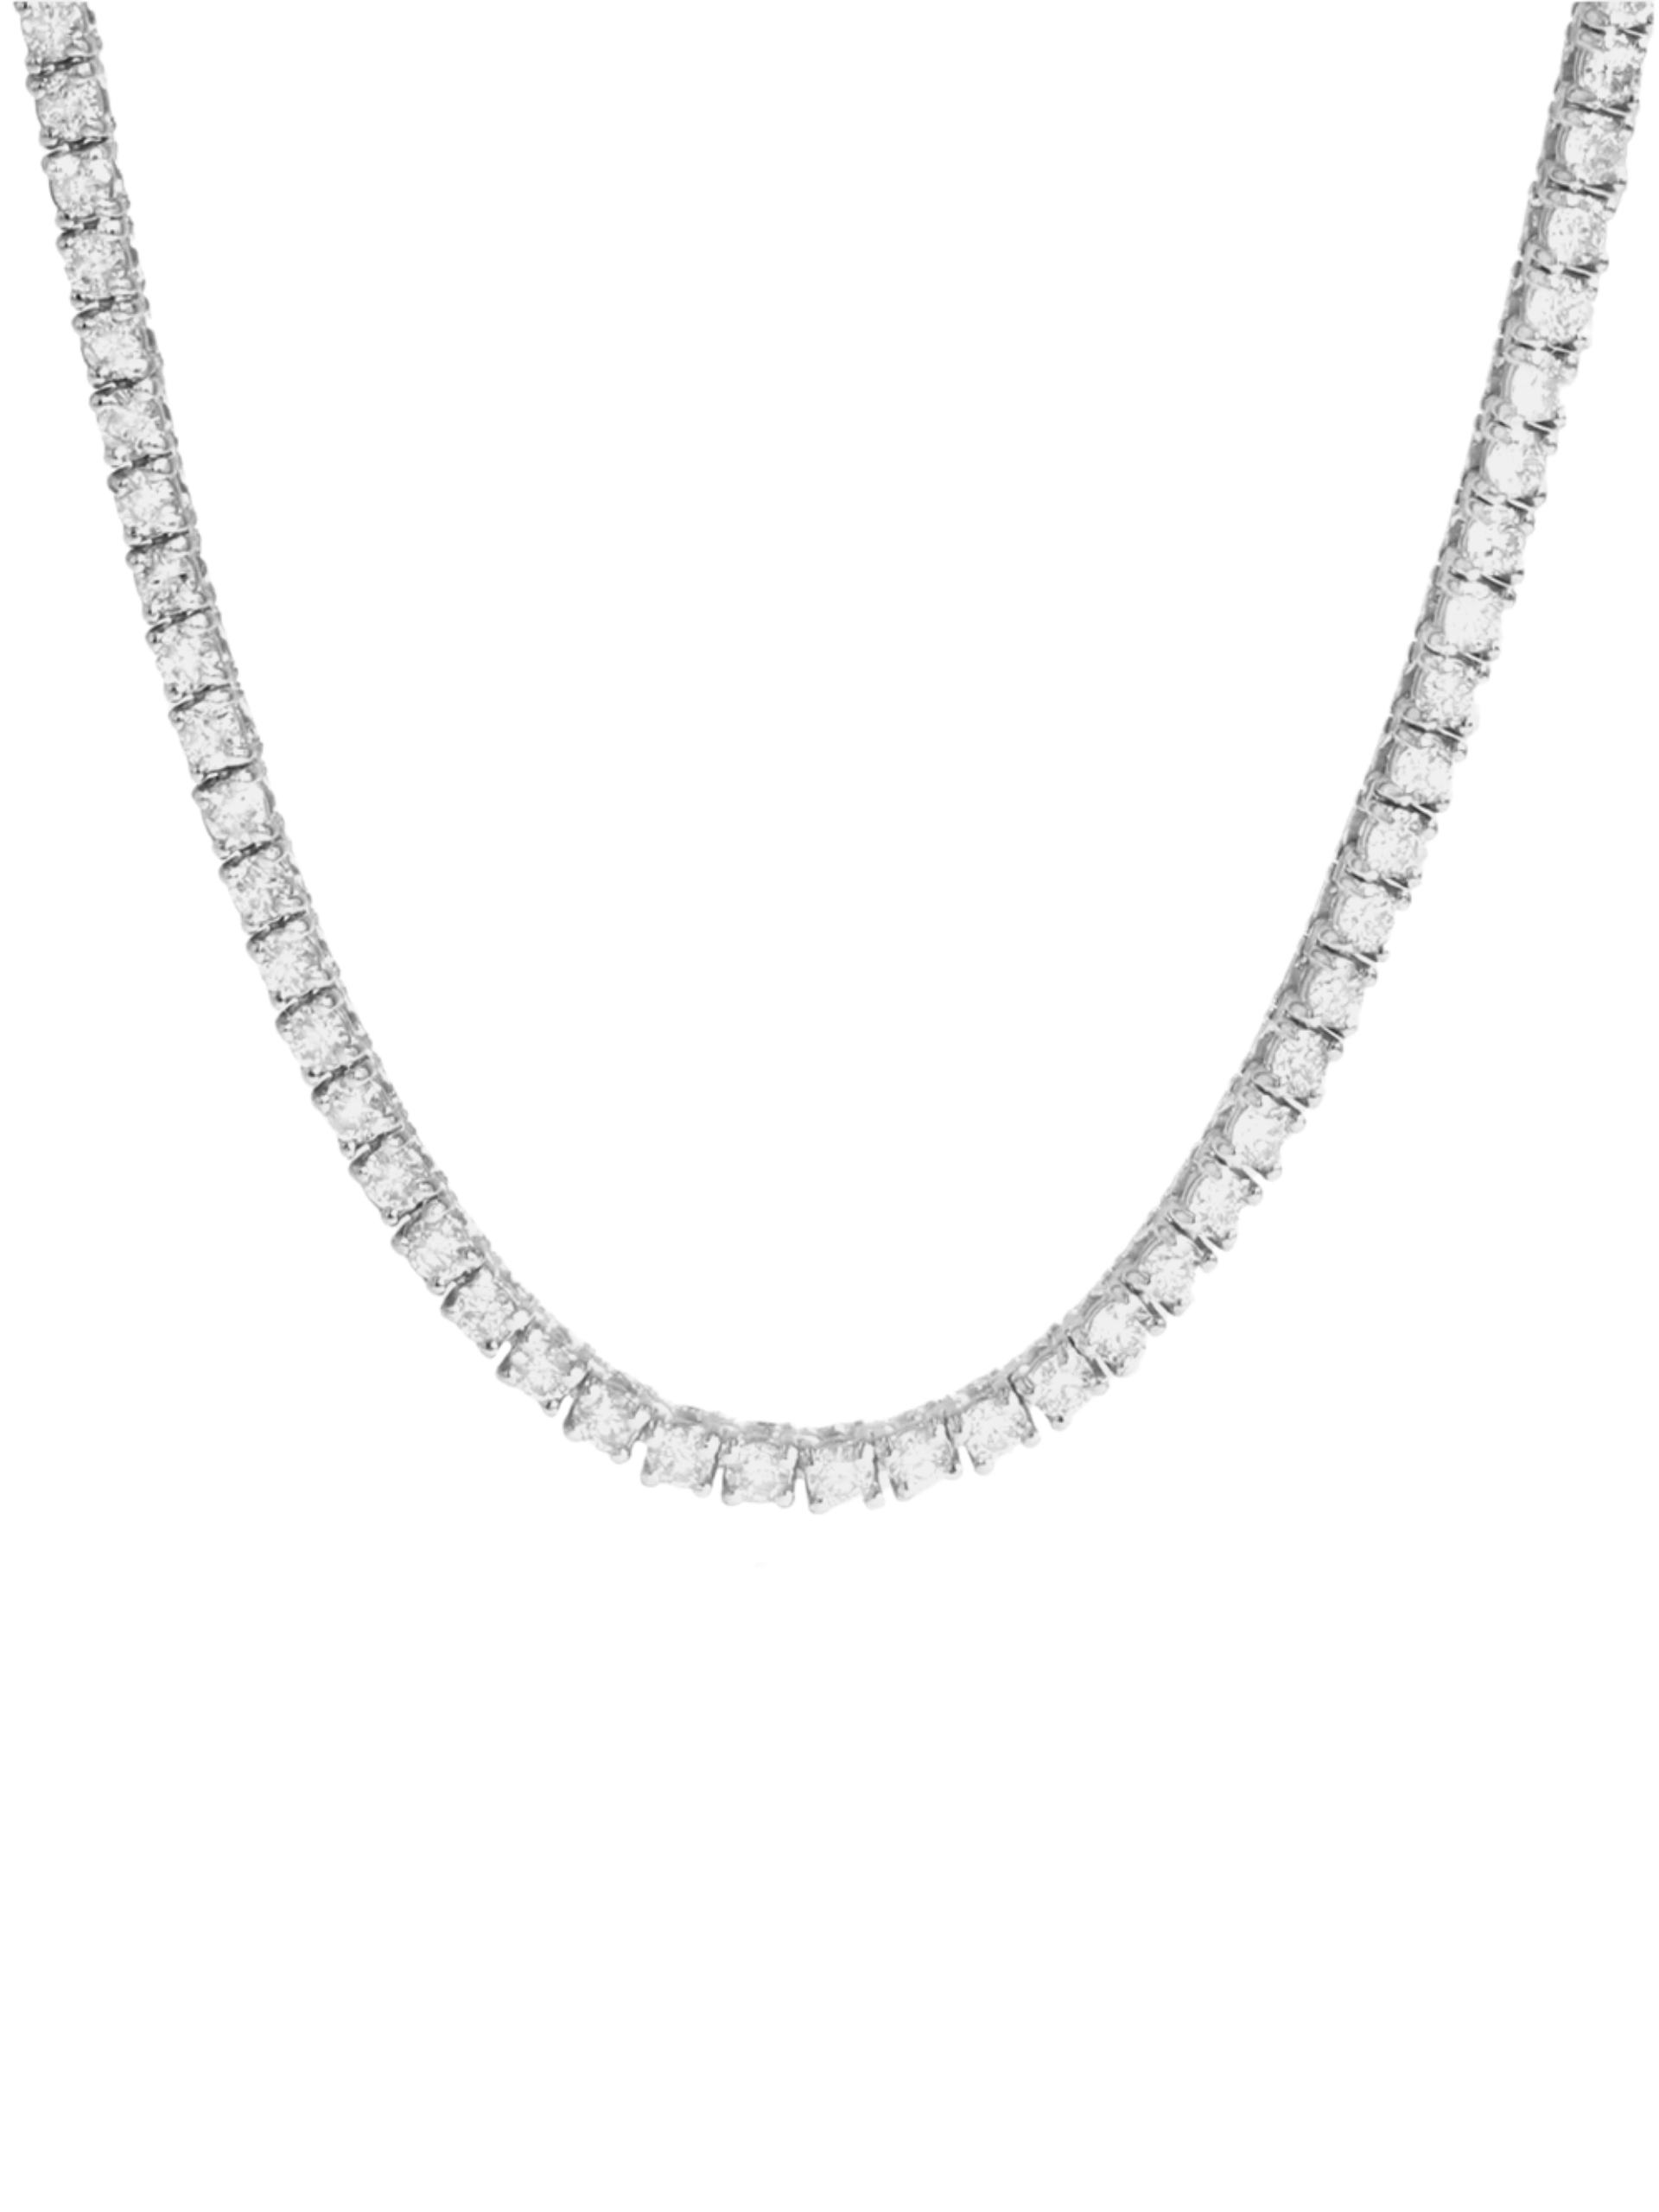 Tennis necklace - silver